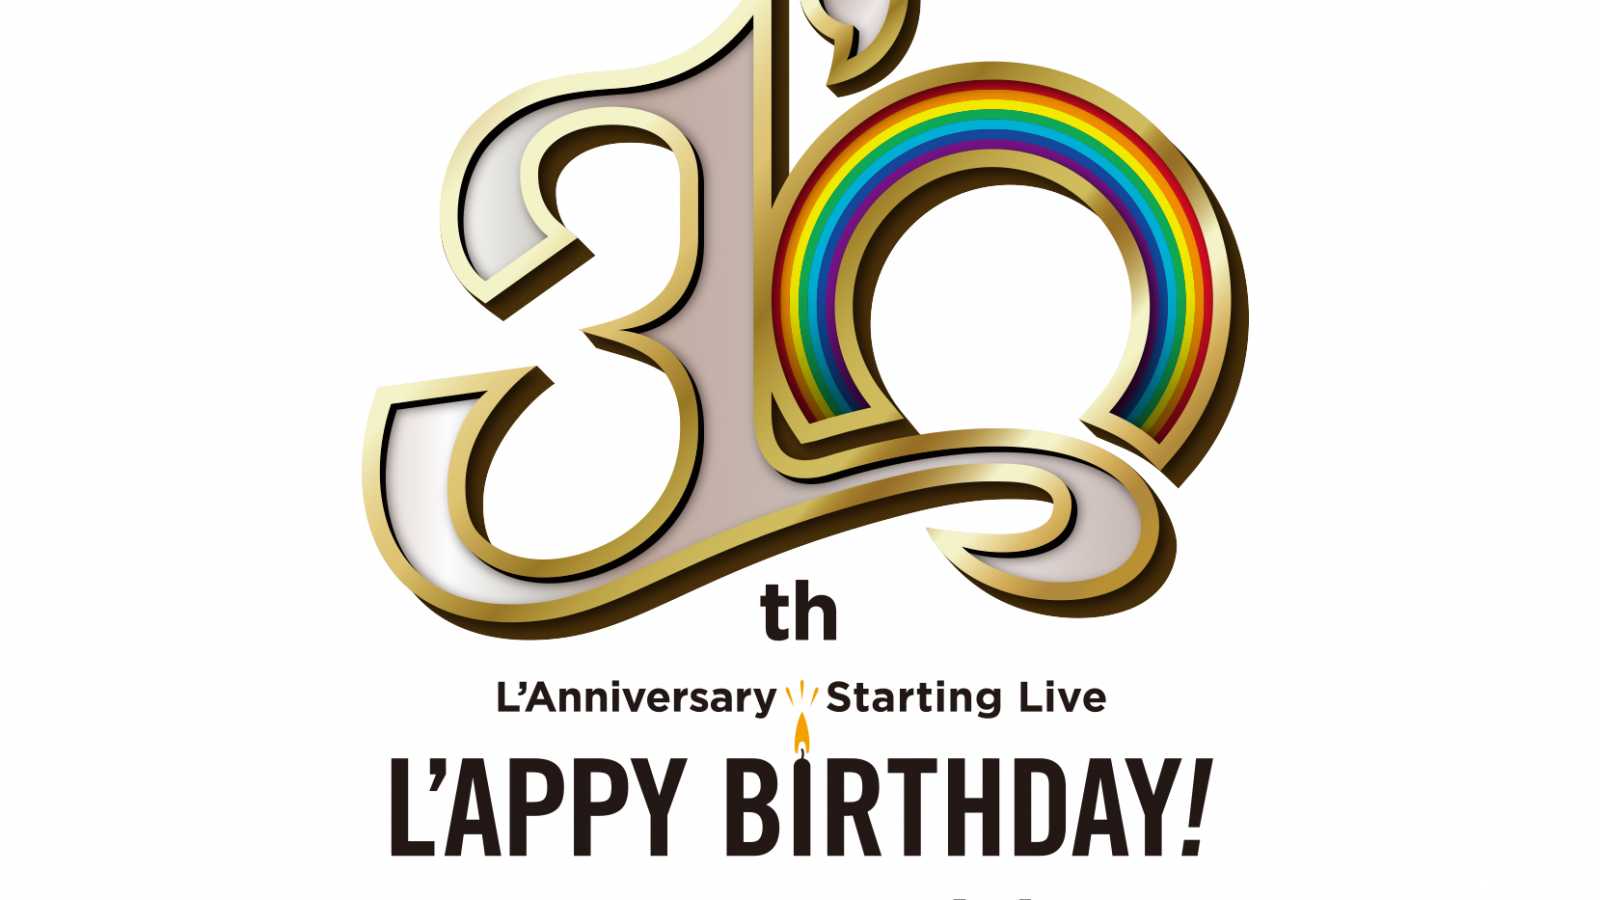 30th L'Anniversary Starting Live "L'APPY BIRTHDAY!" © L’Anniversary Starting Live “L’APPY BIRTHDAY!”